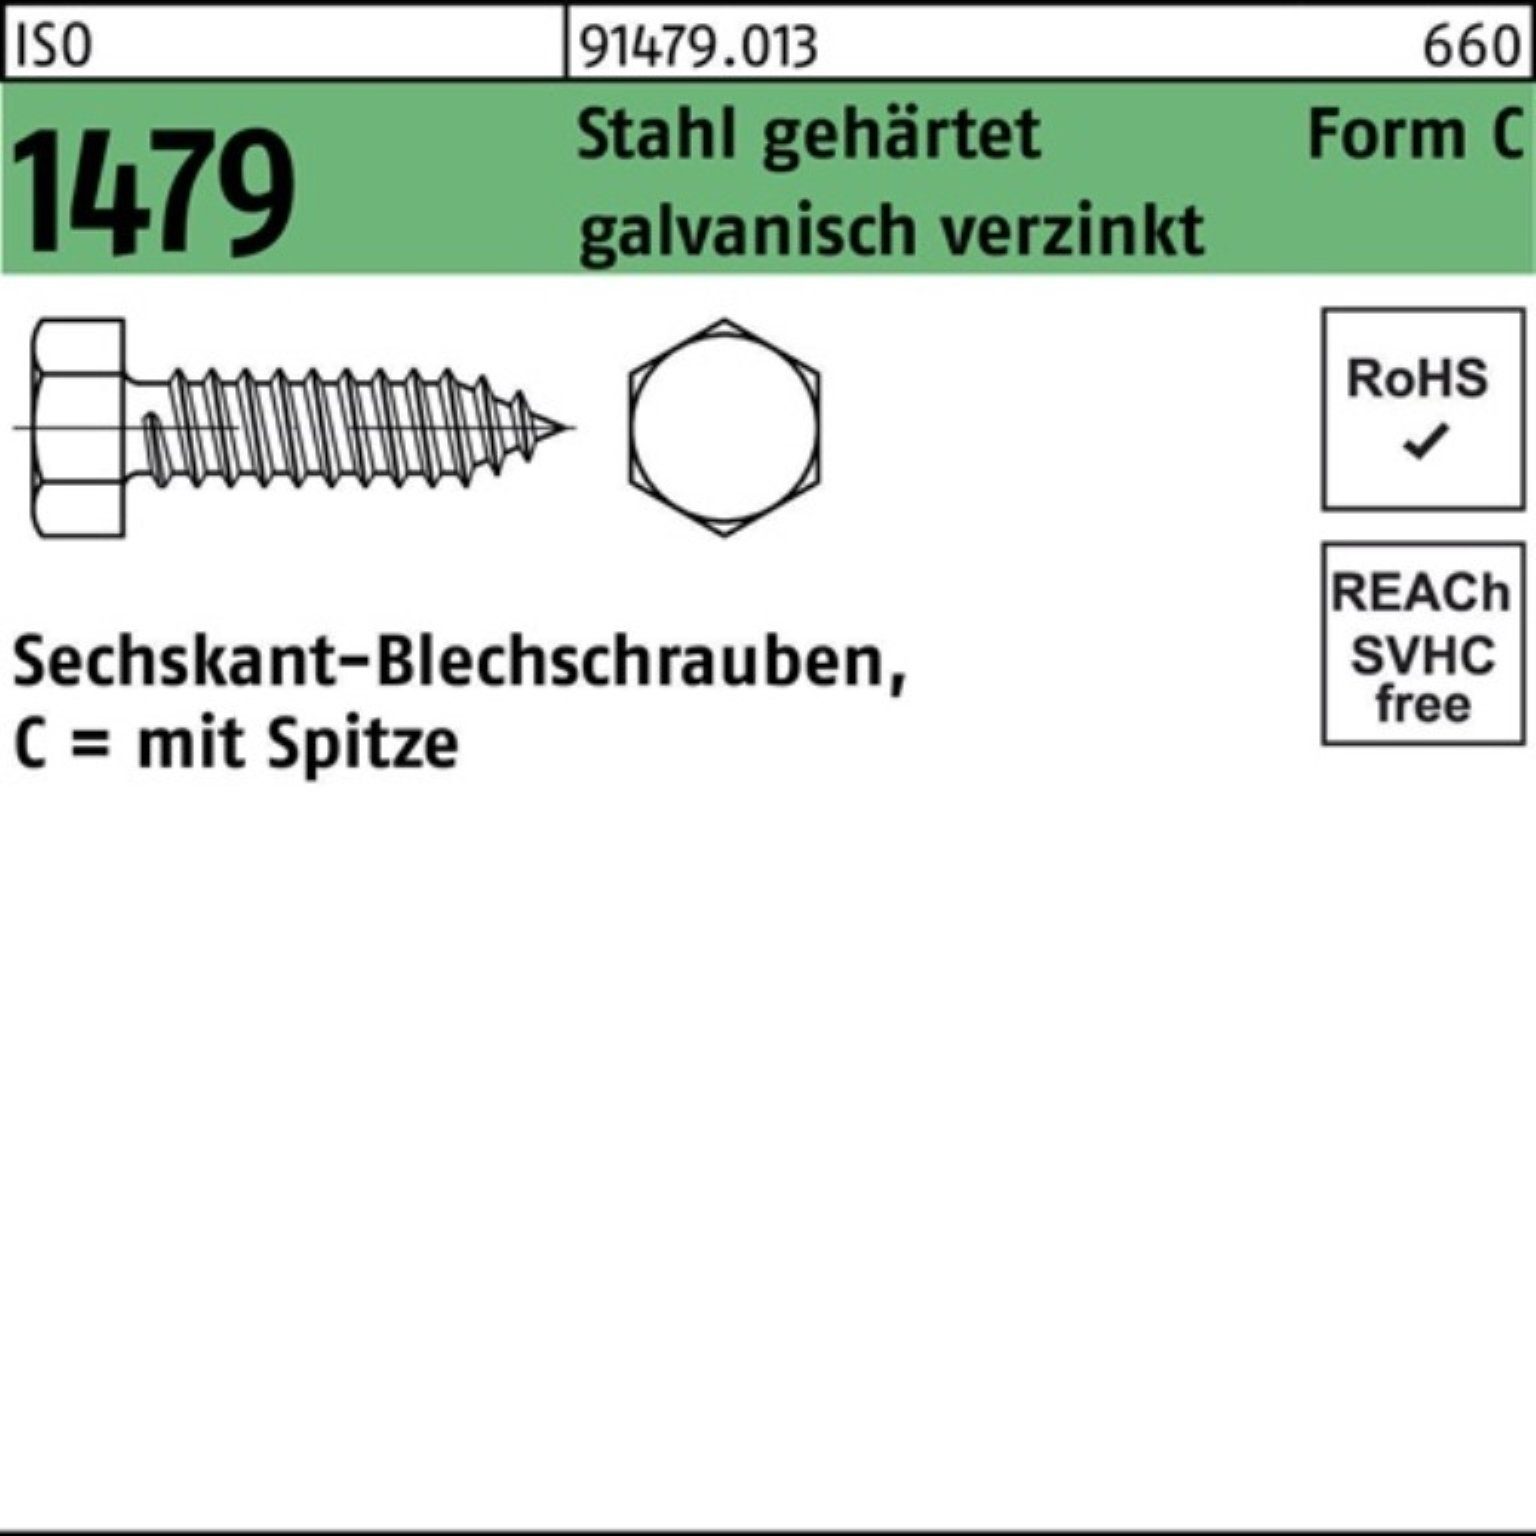 Blechschraube Stahl 250er C Spitze/6-kt gehärtet Reyher 5,5x38 Pack Blechschraube 1479 ISO